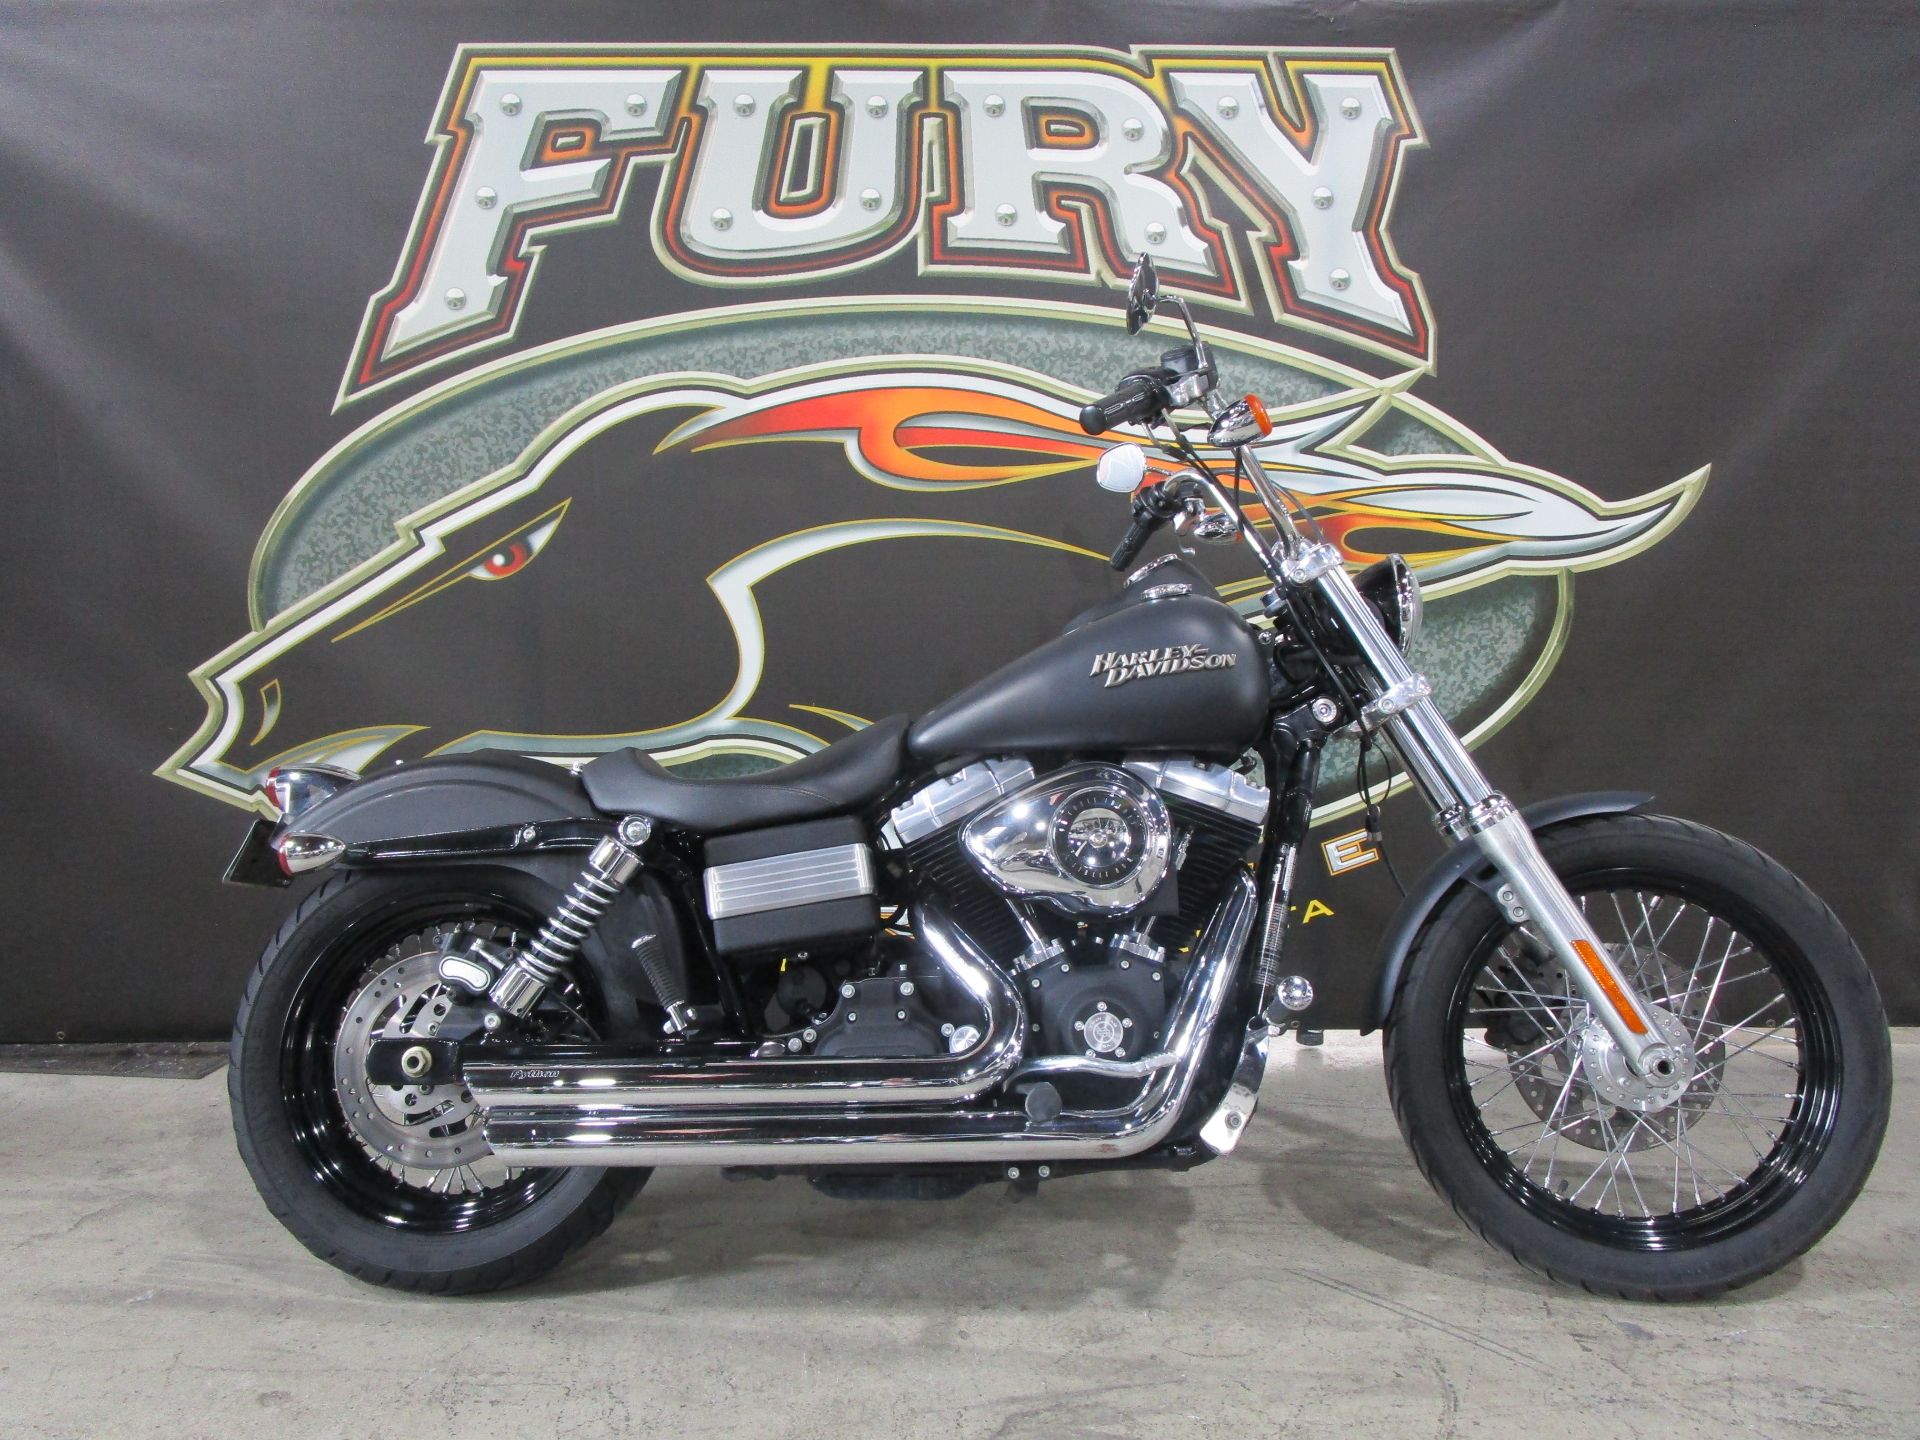 2010 Harley-Davidson Dyna® Street Bob® in South Saint Paul, Minnesota - Photo 1